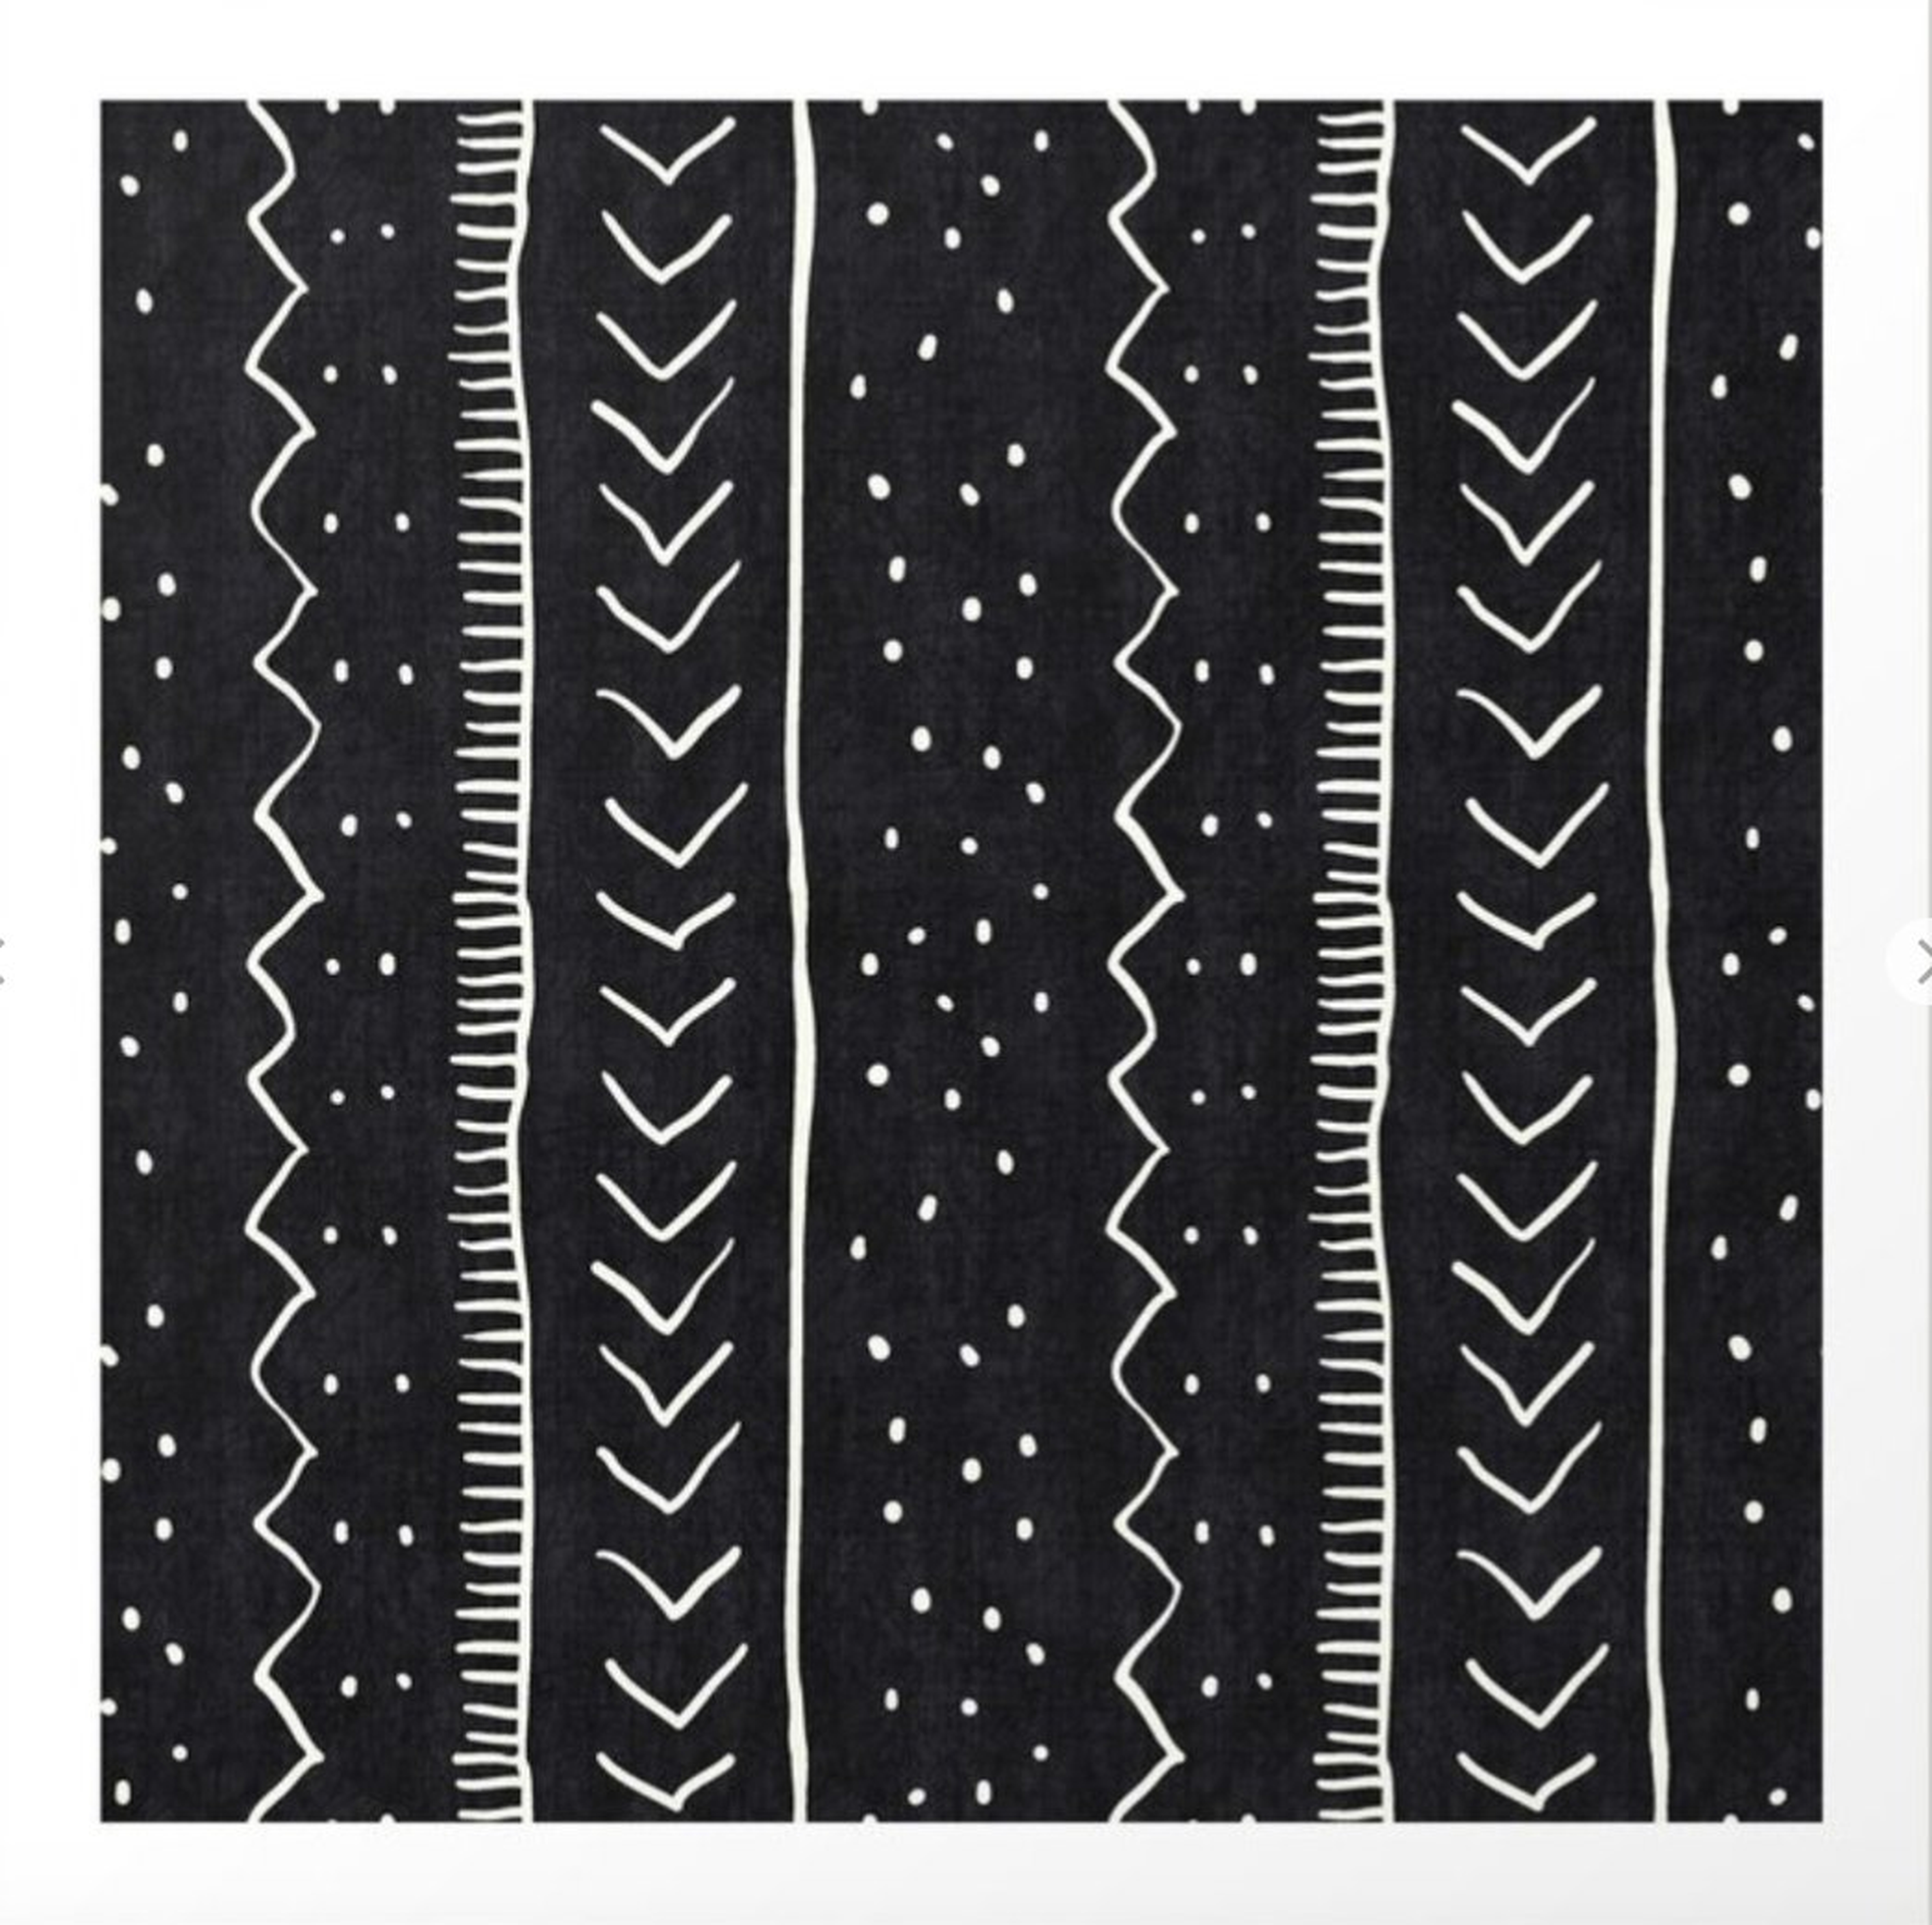 Moroccan Stripe in Black and White Art Print - Society6